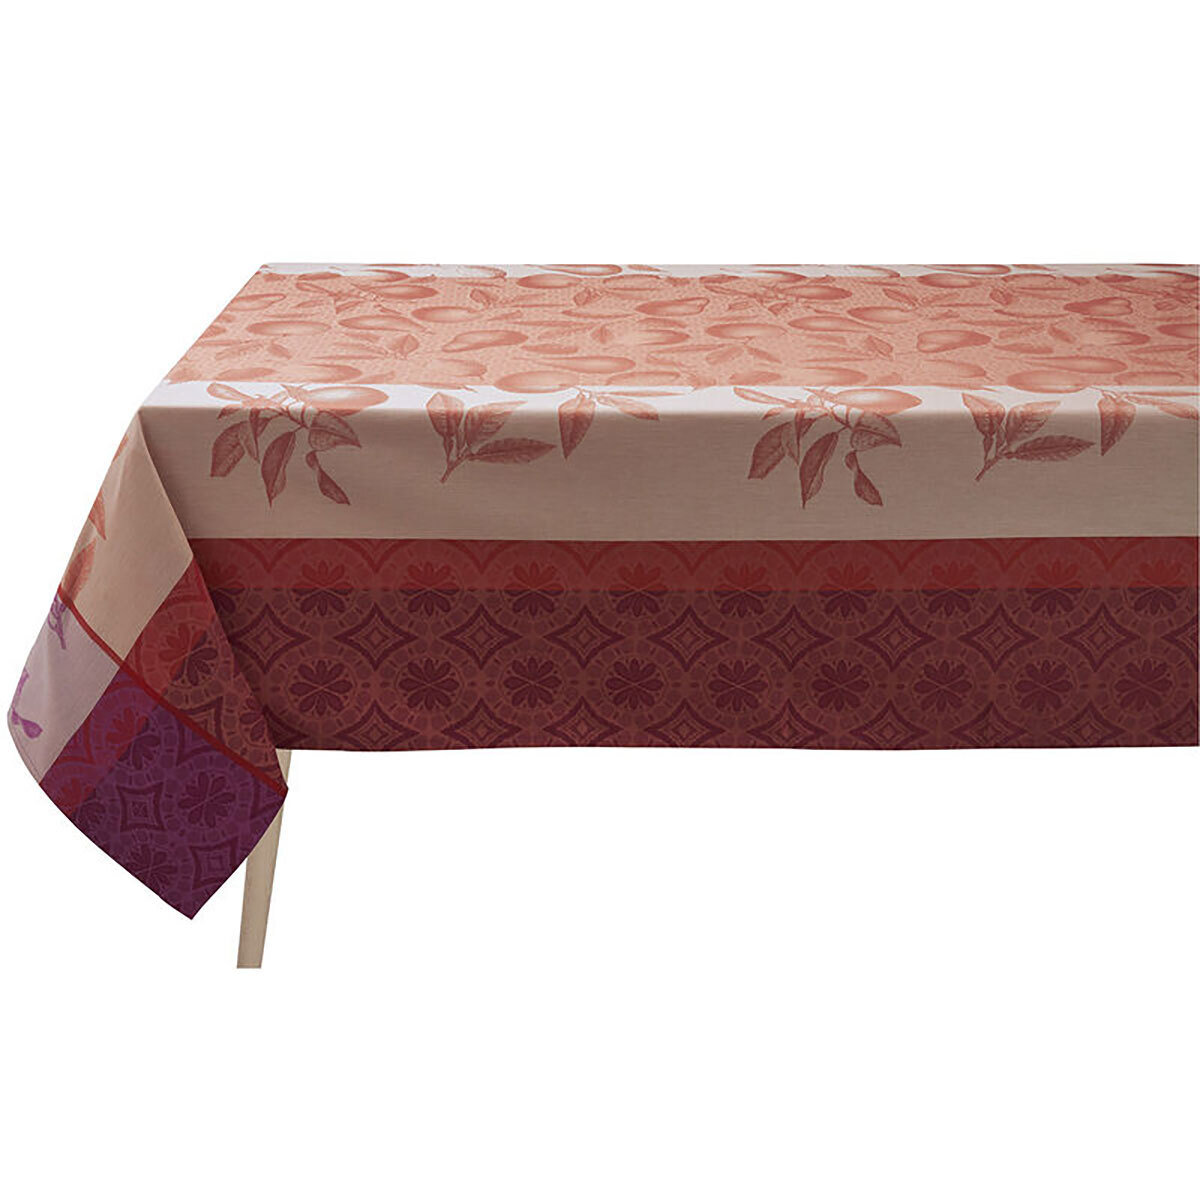 Le Jacquard Francais Arriere-Pays Pink Tablecloth 69 x 126 Inch 27394